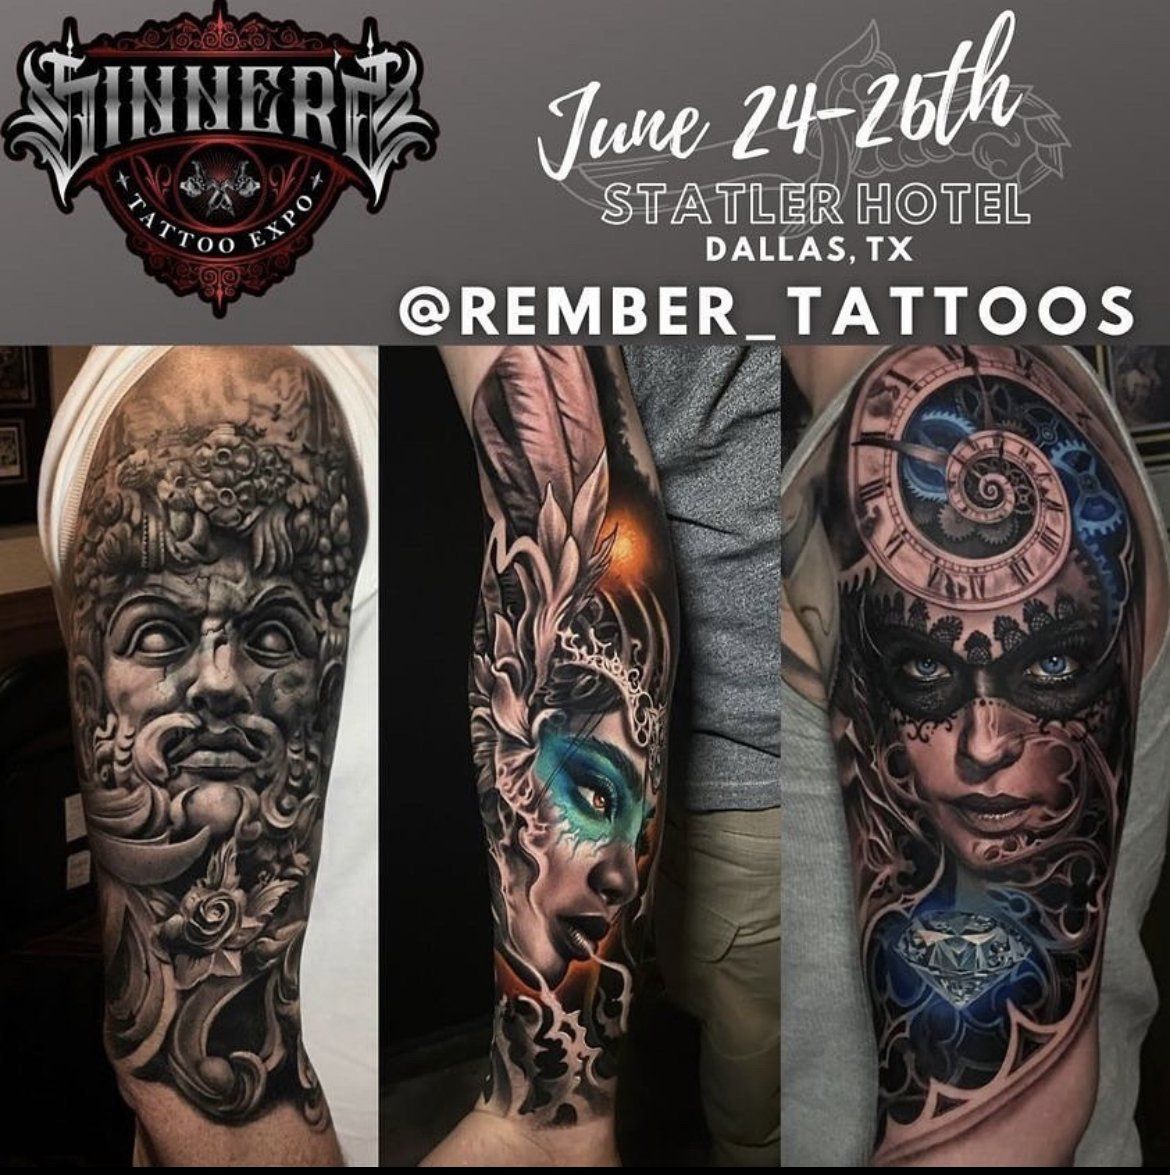 Sinners tattoo expo